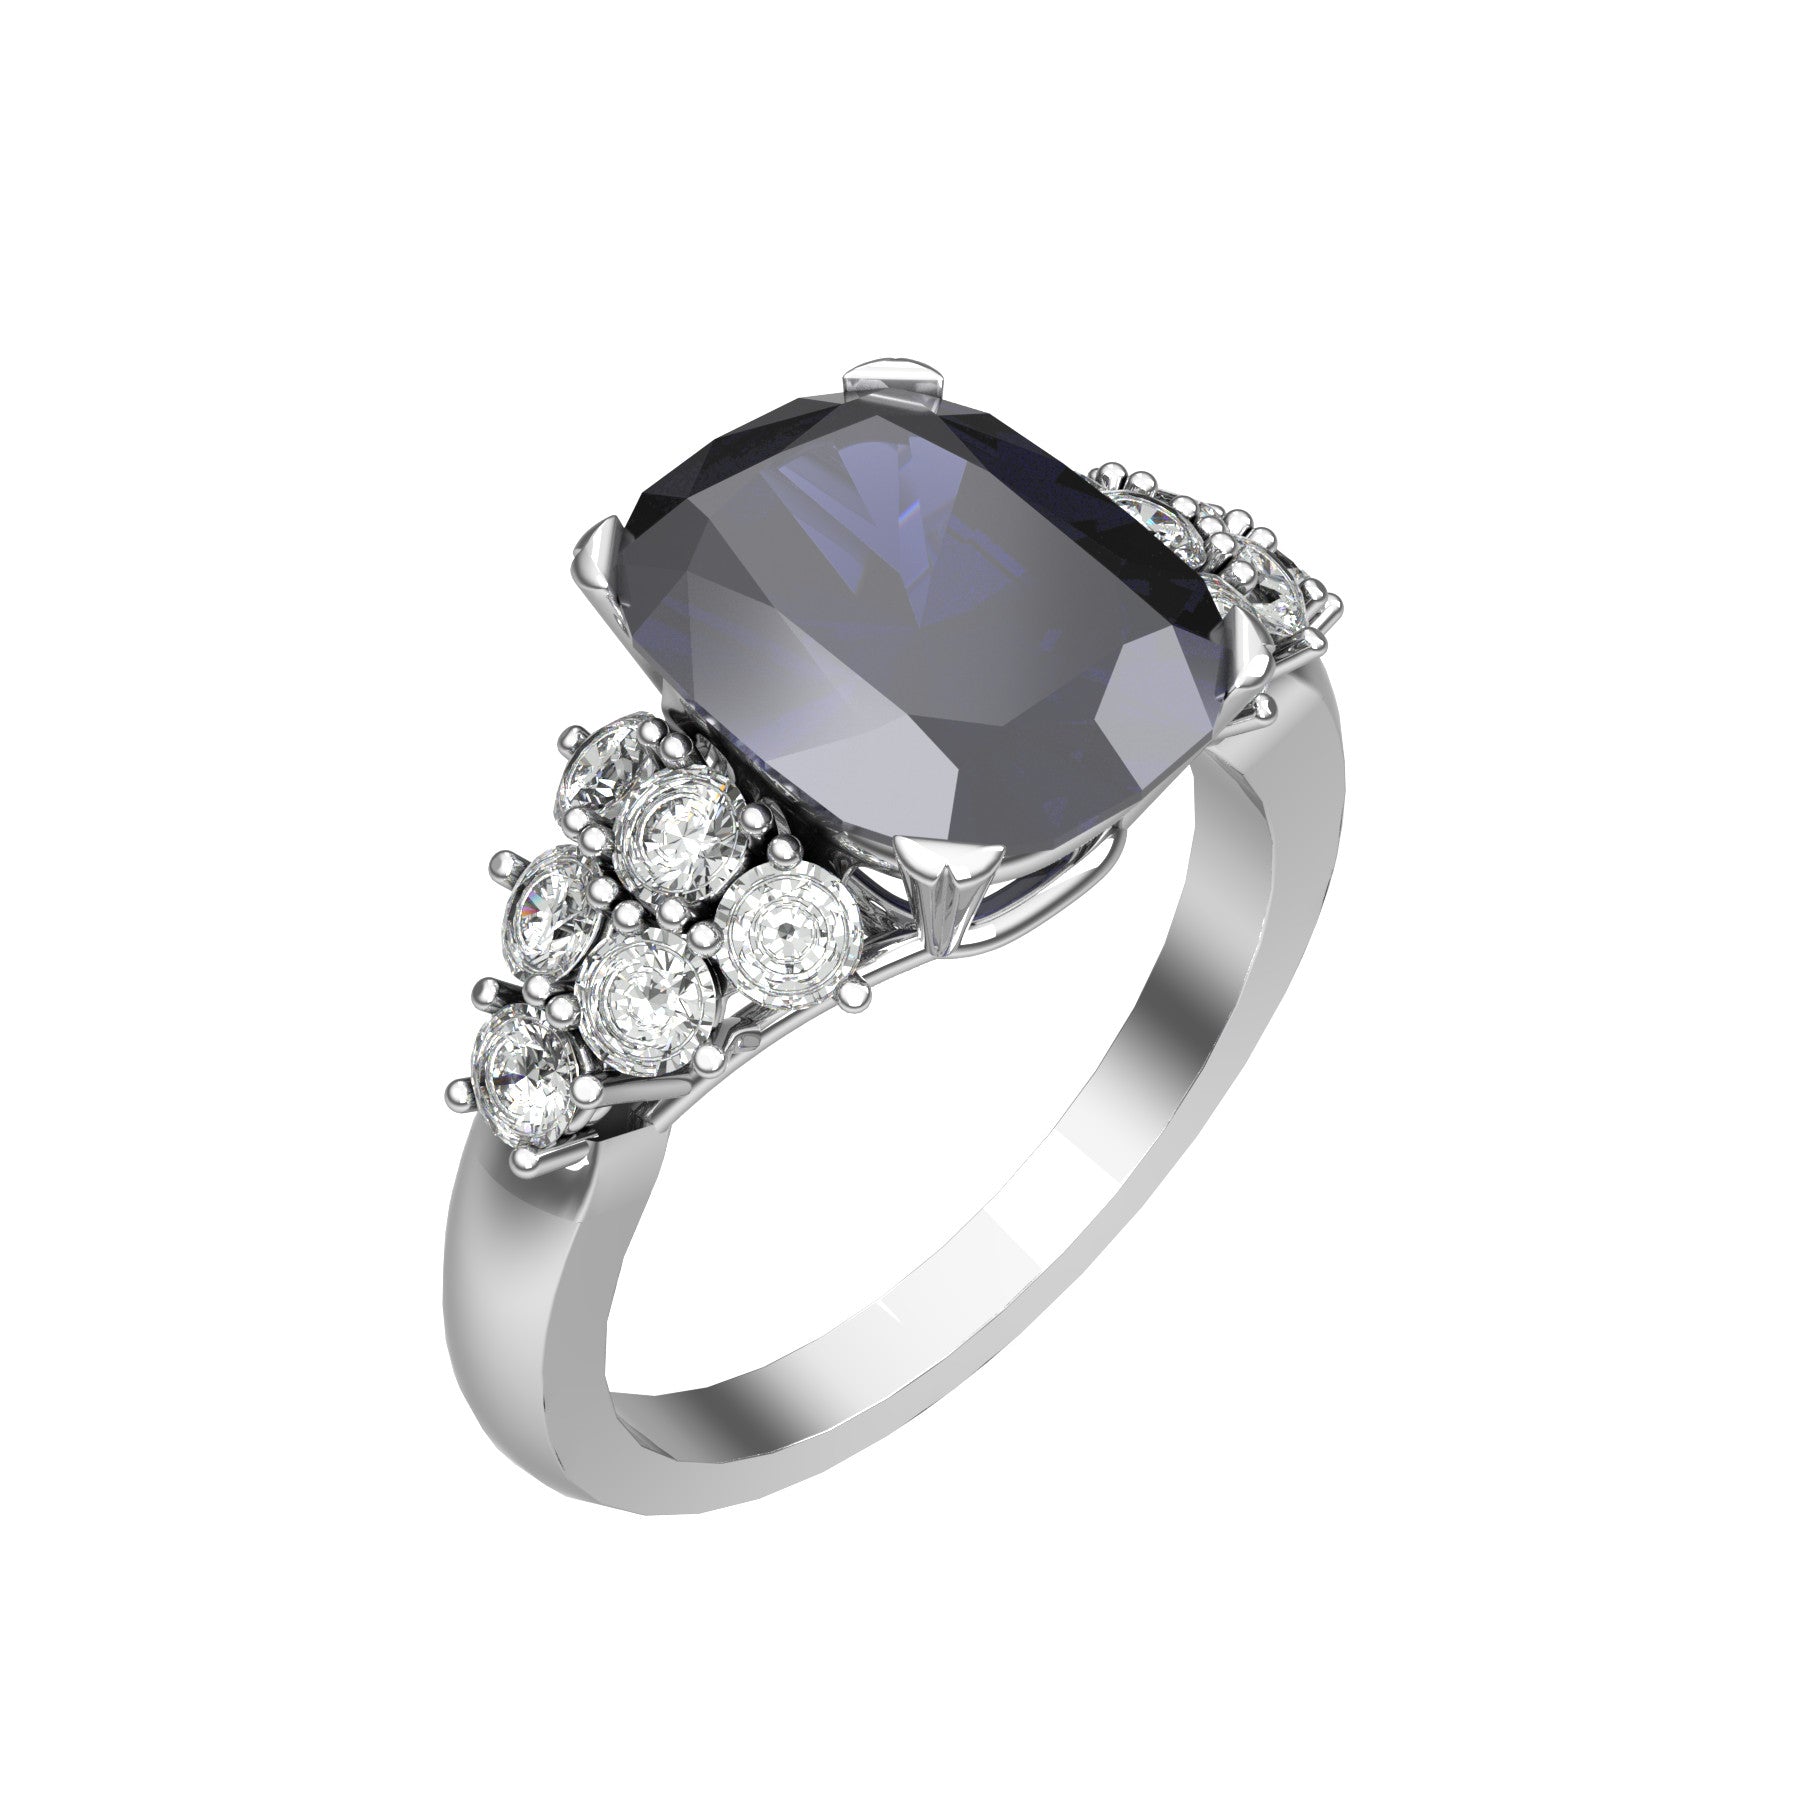 bleu royal ring, 18 K white gold, 3,48 natural sapphire, 12 natural round diamonds, weight 4,50 g. (0.16 oz), width 10, 4 mm max